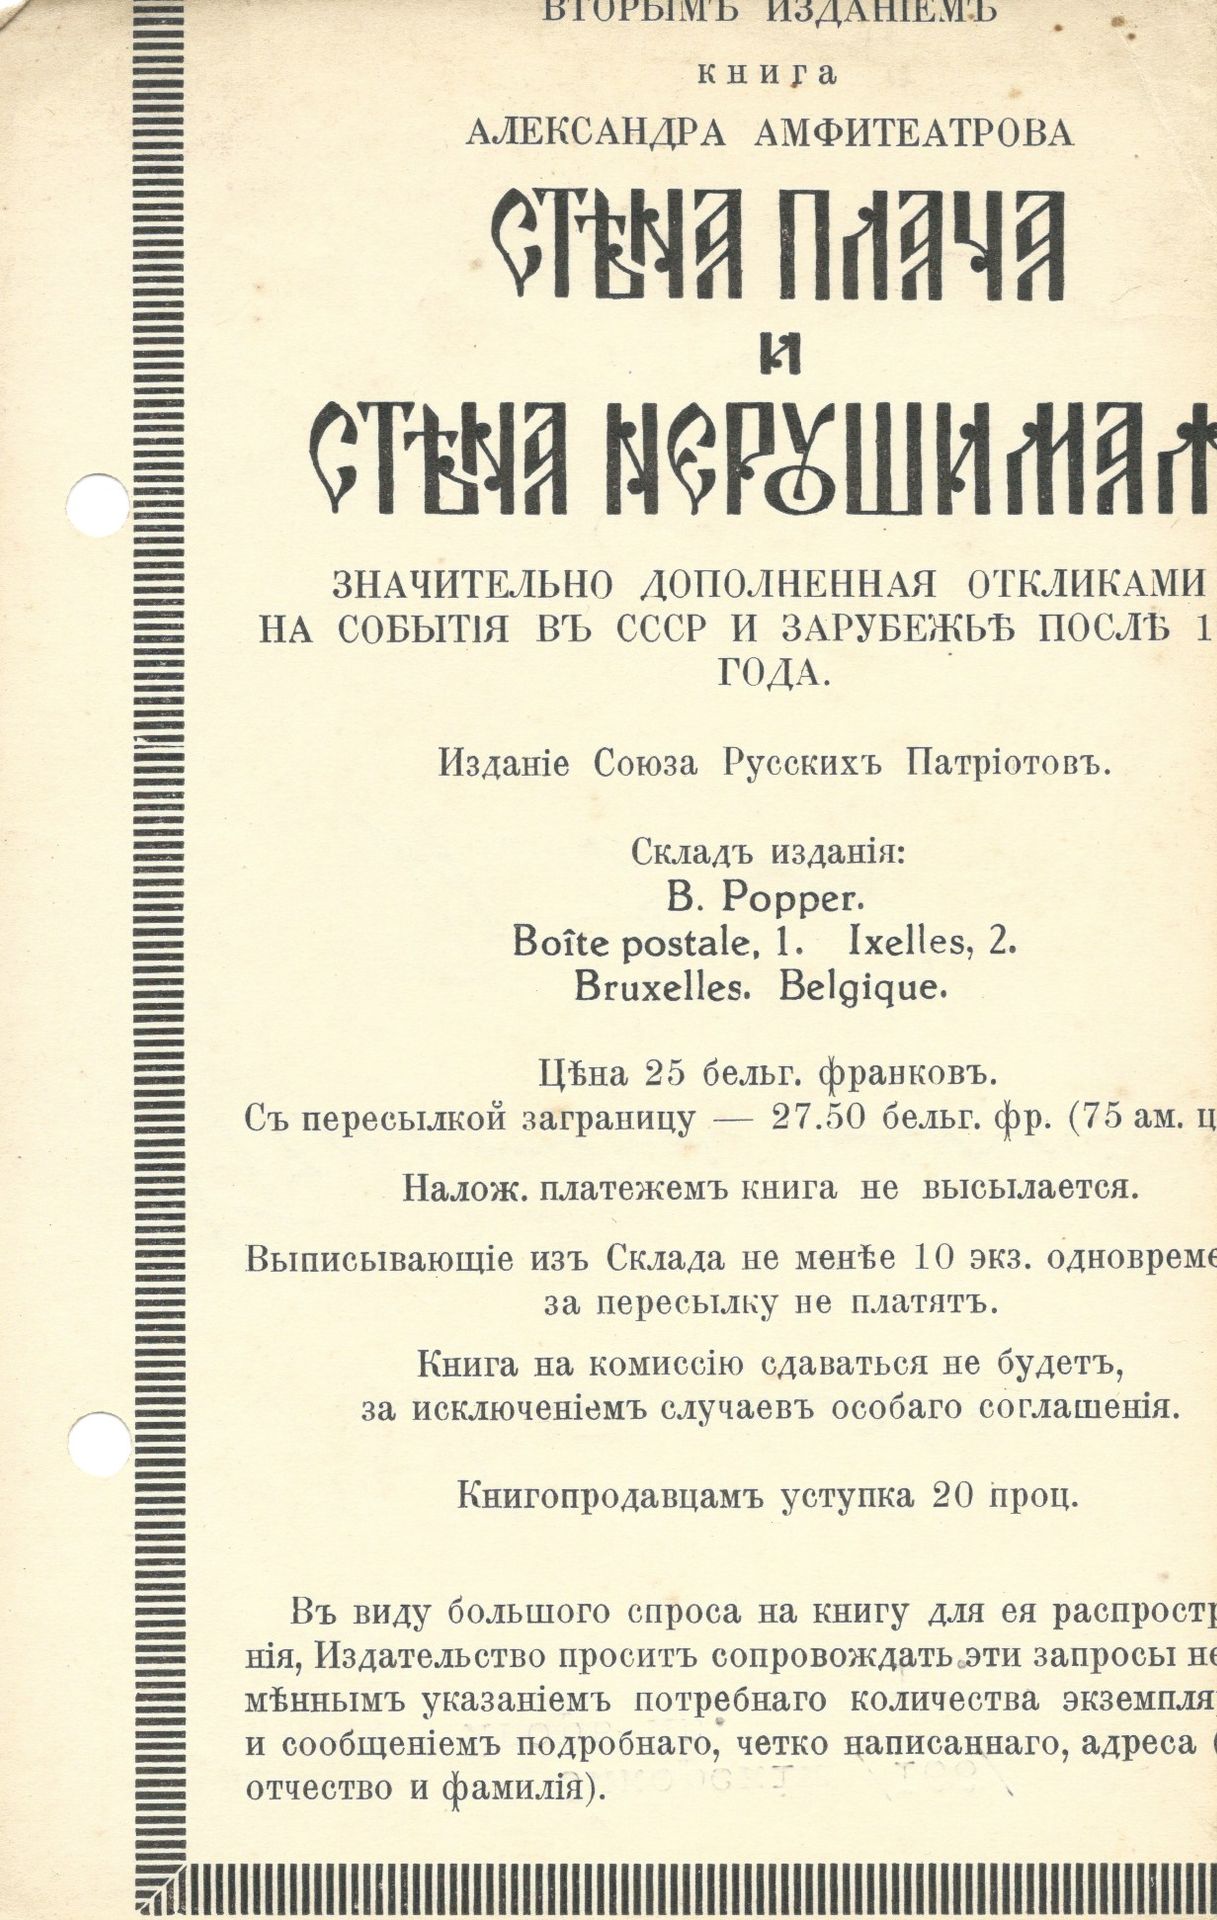 Null 安德烈-巴拉肖夫（1899-1969）的档案

西科尔斯基-伊戈尔(1889-1972) - 亲笔签名

- 与飞机设计师伊戈尔-西科尔斯基的通信。1&hellip;